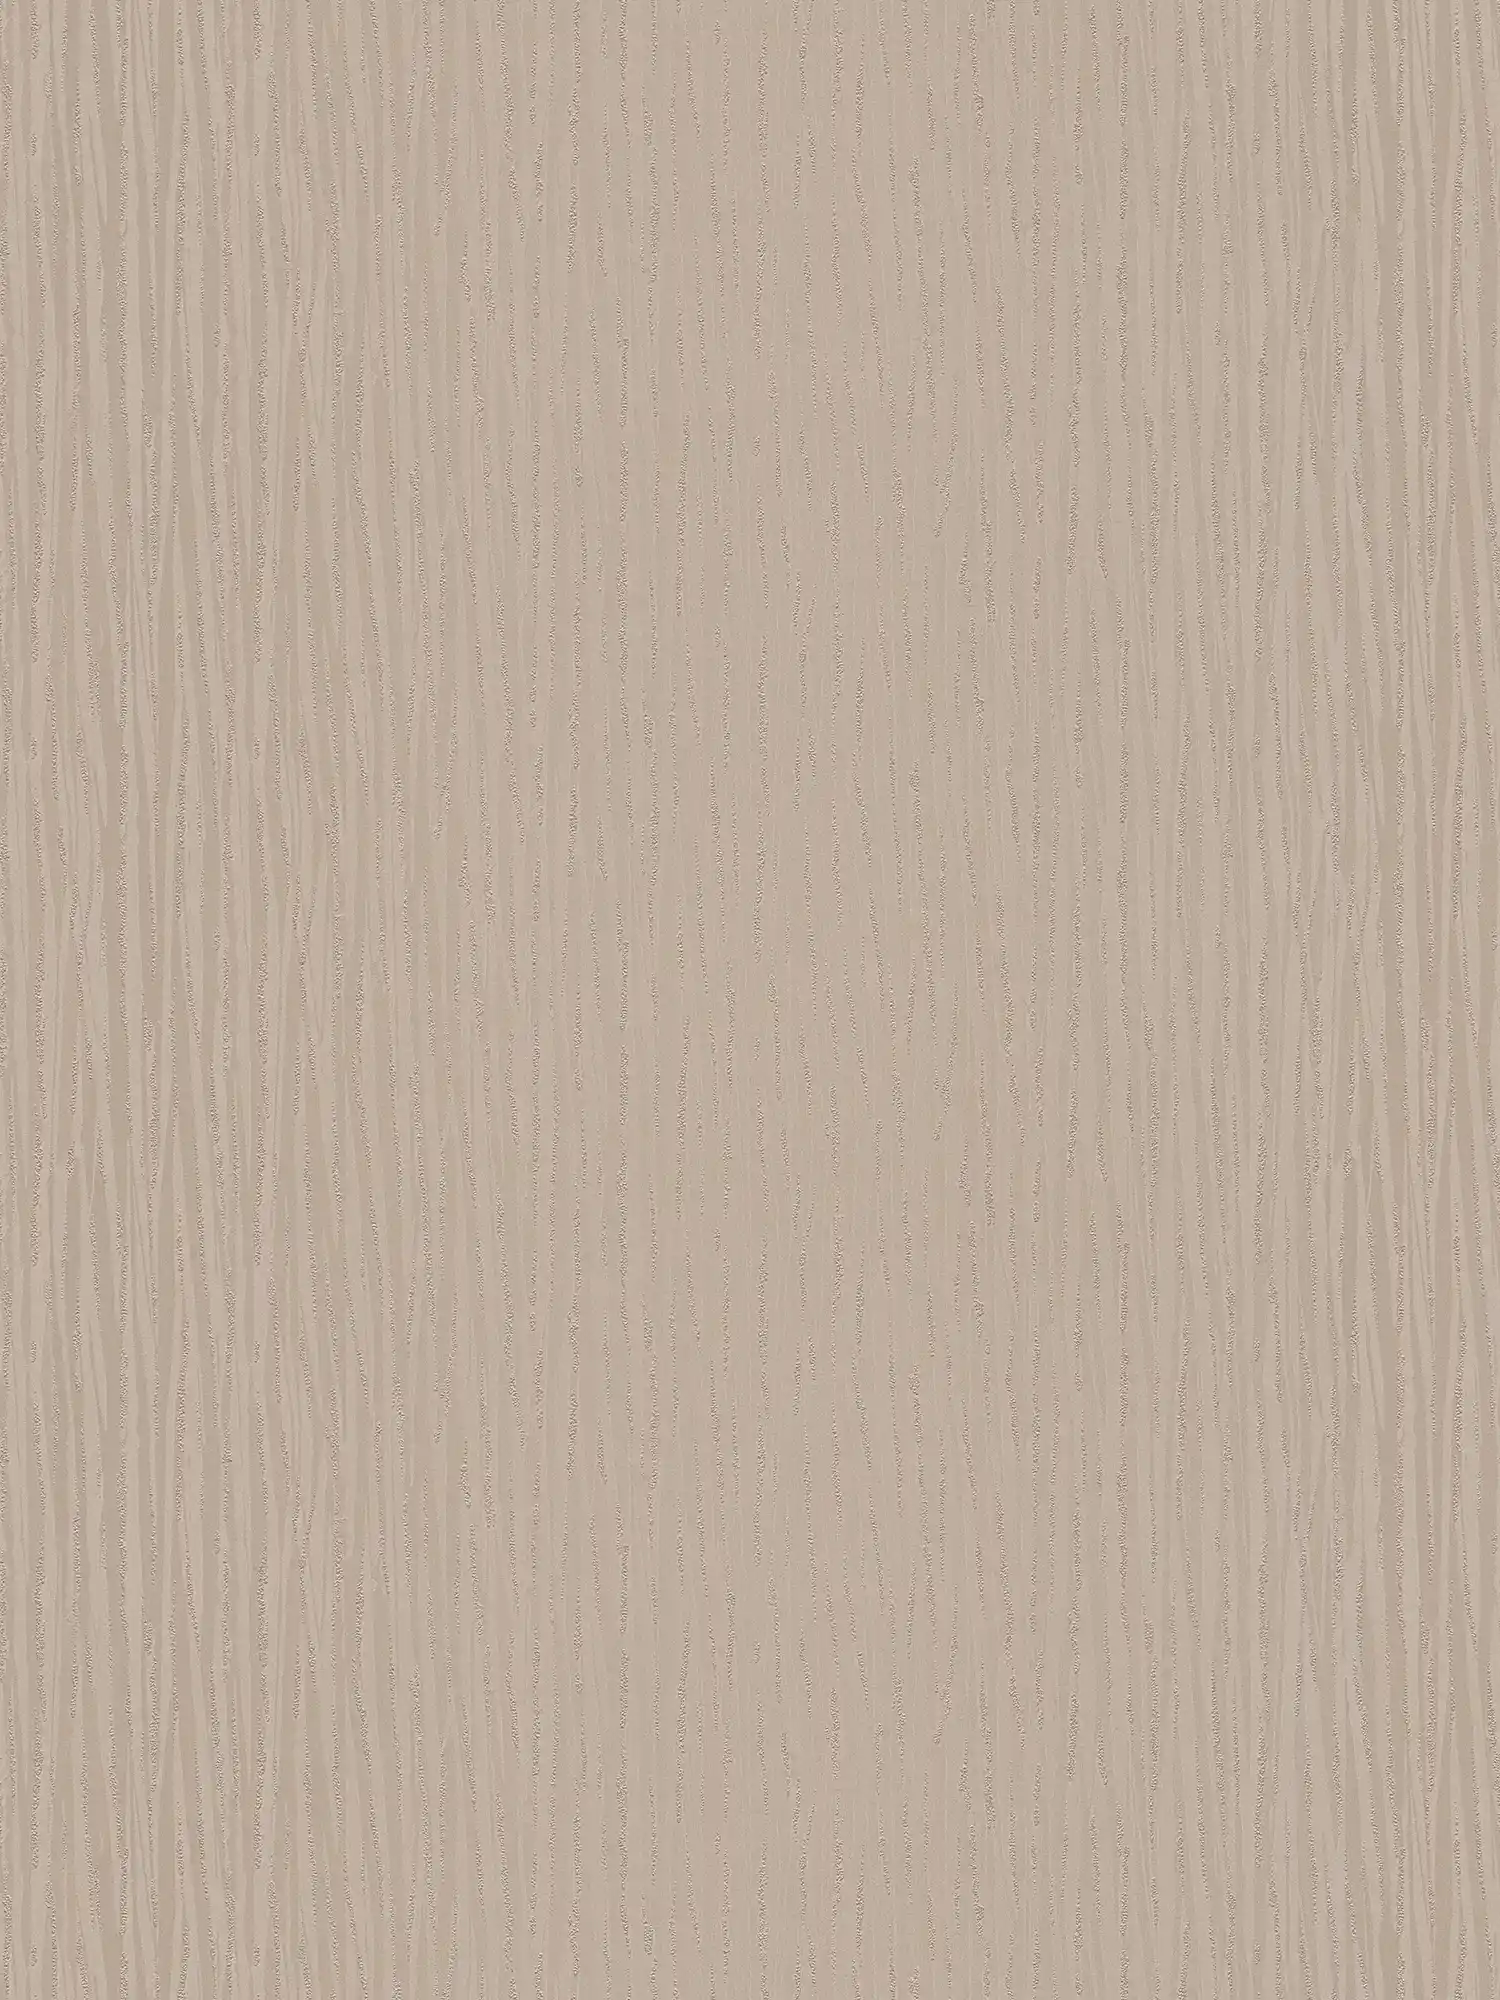 Plain wallpaper beige with metallic luster & hatch design
